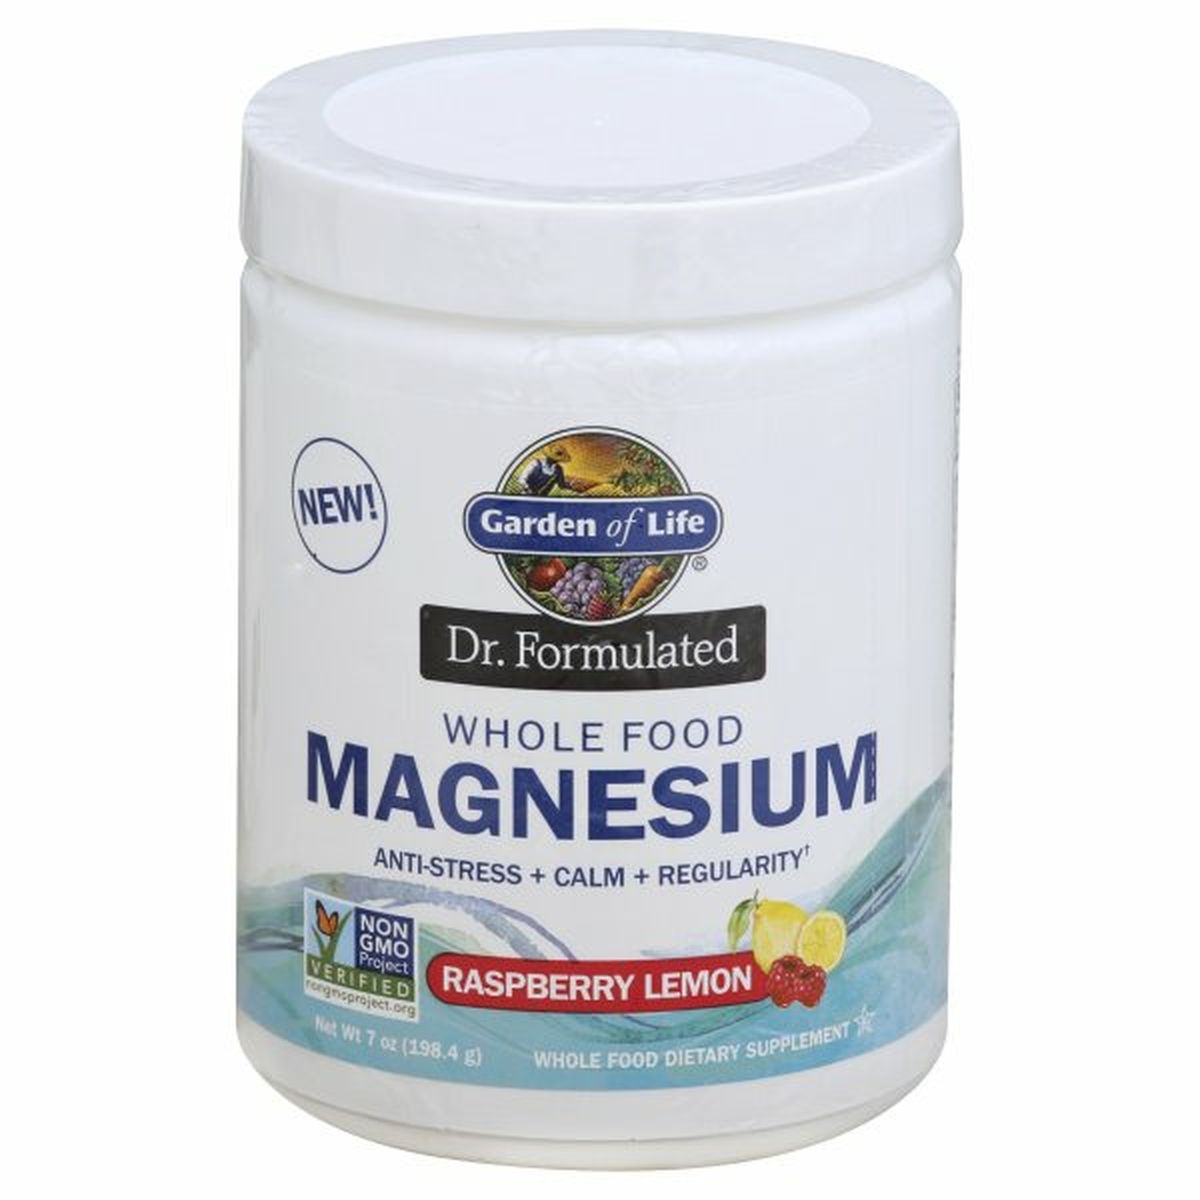 Calories in Garden of Life Magnesium, Whole Food, Raspberry Lemon